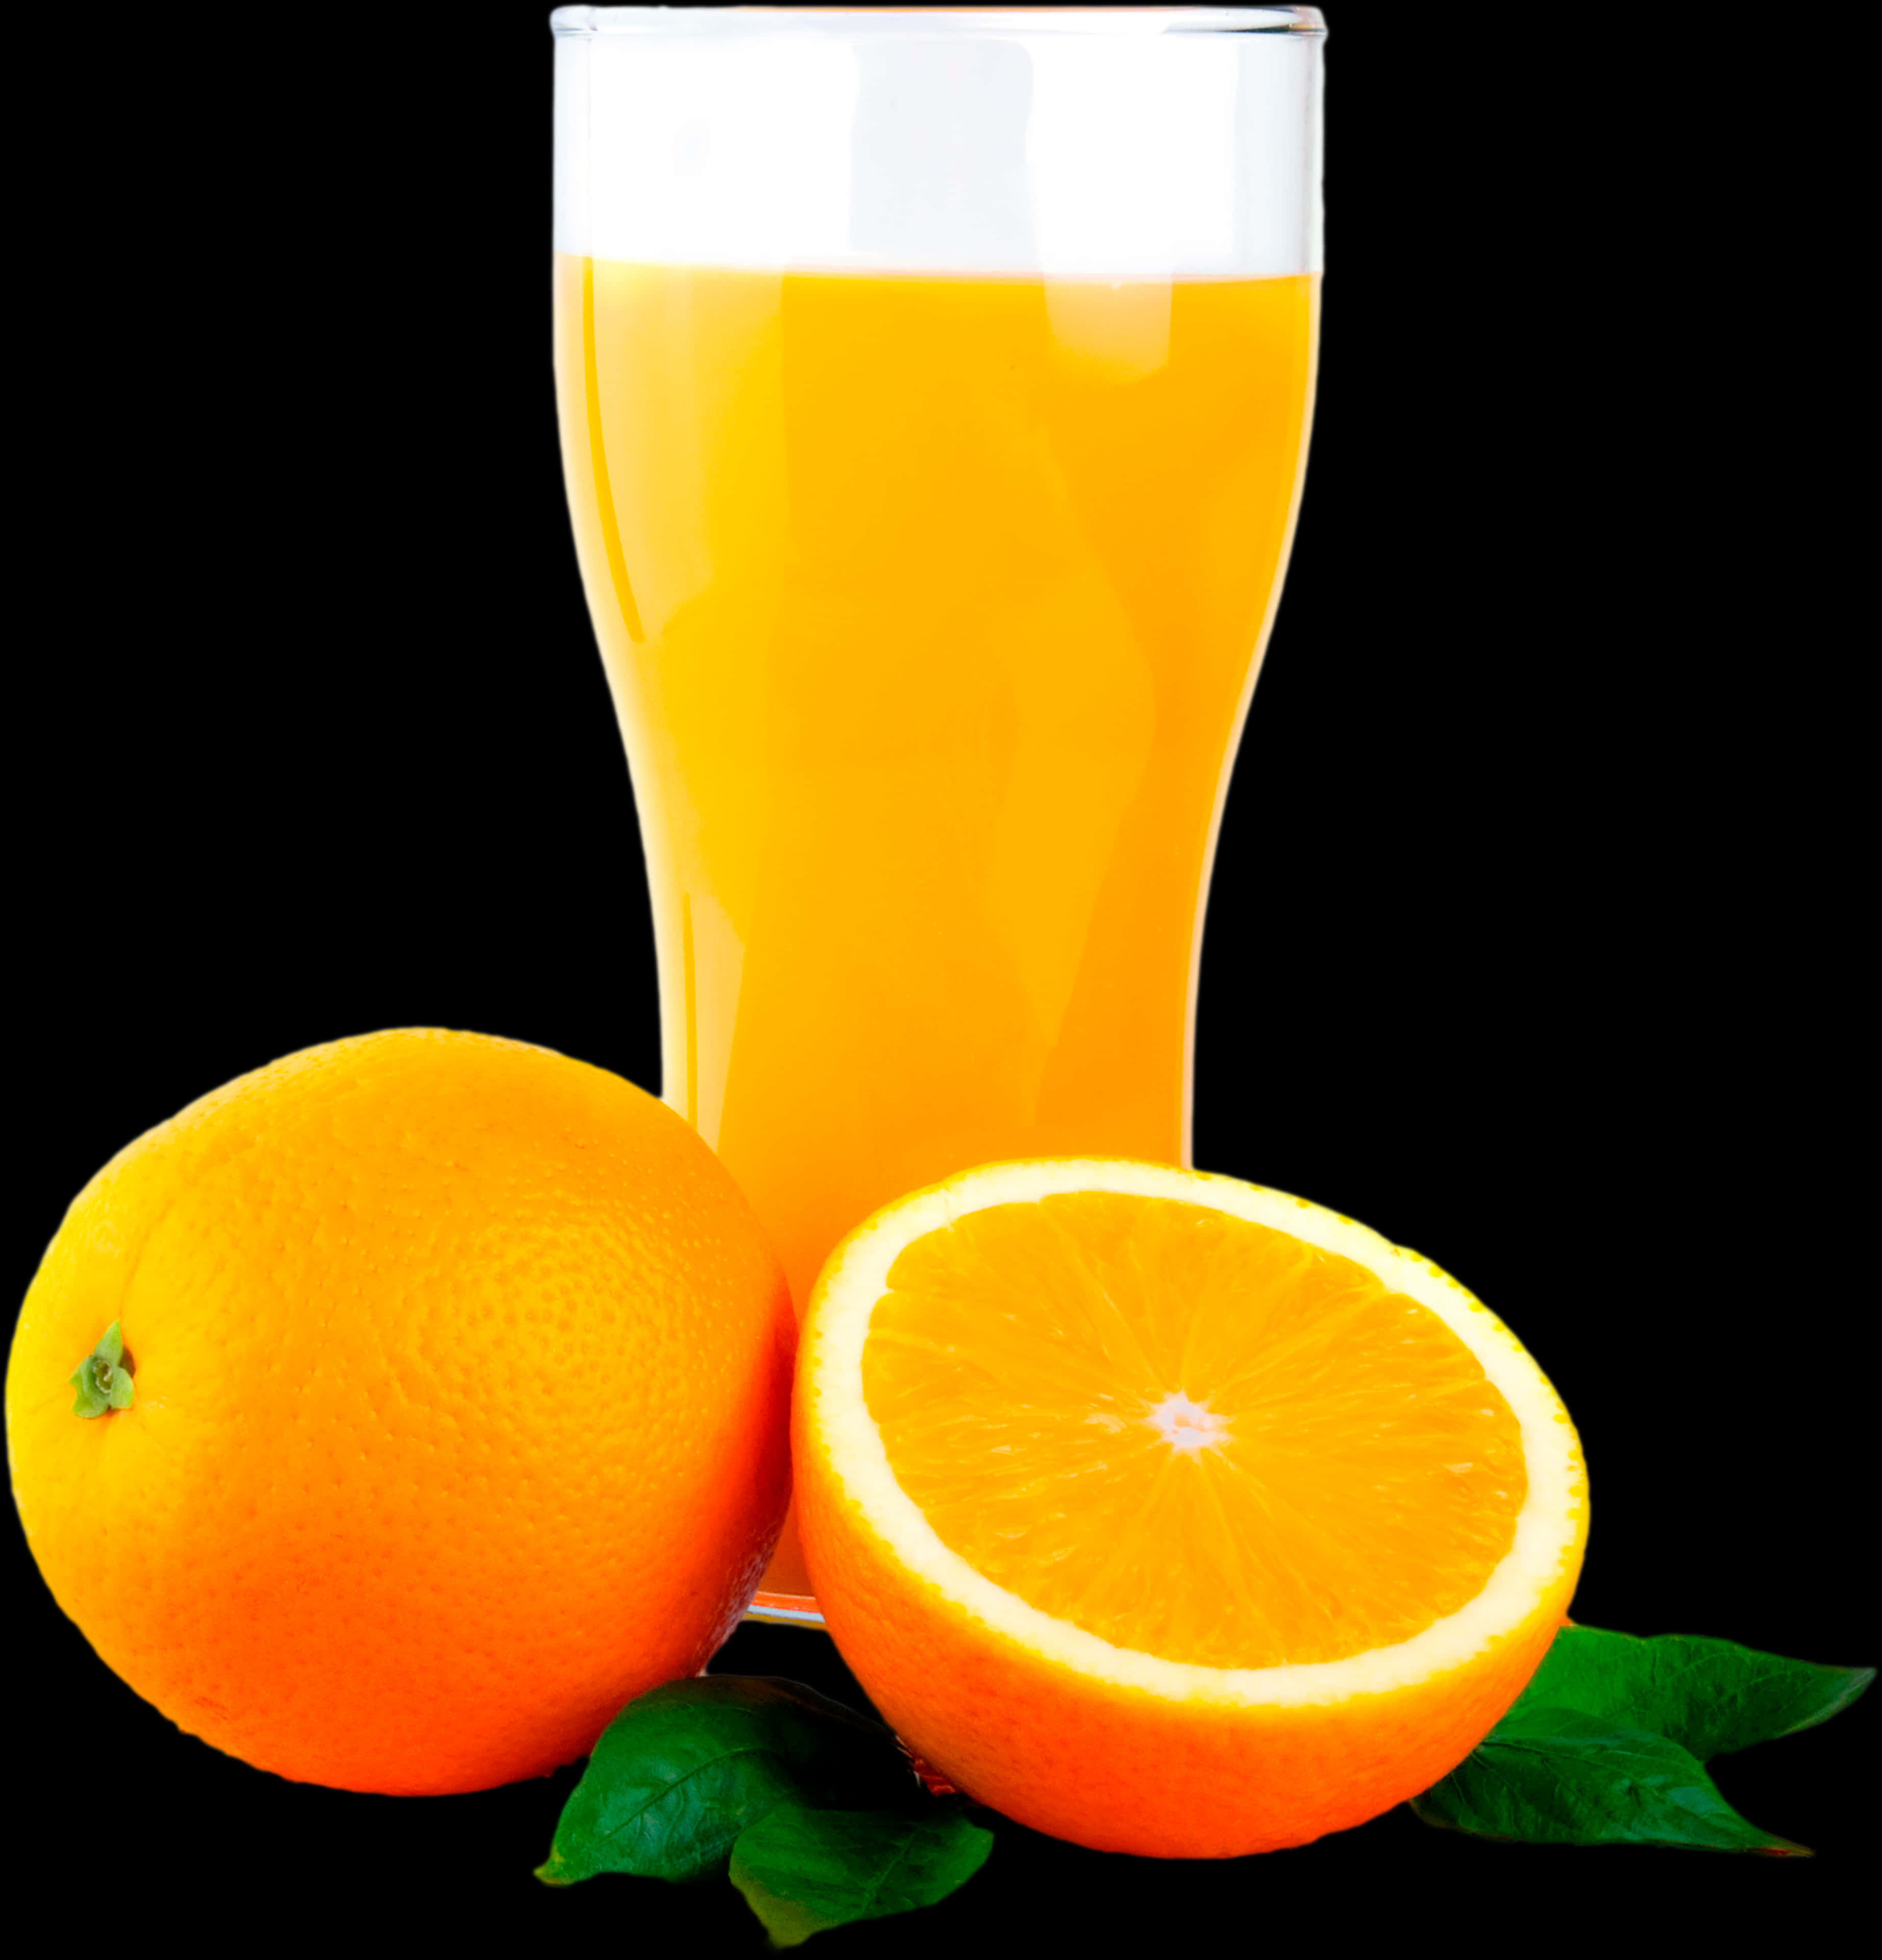 Fresh Orange Juice Glass With Oranges